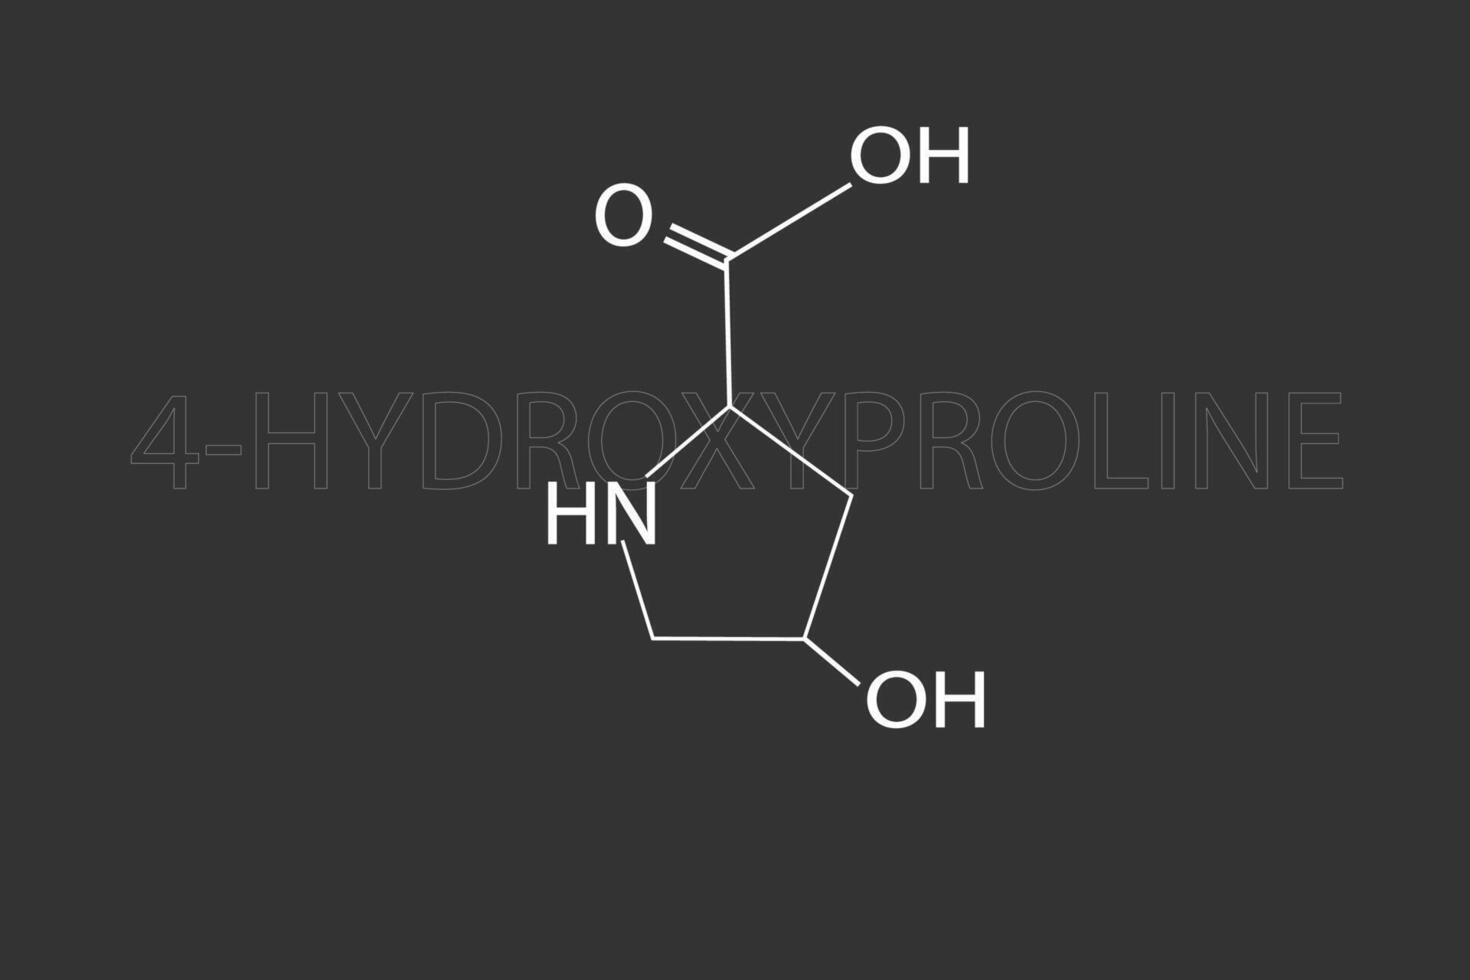 4-hydroxyproline moleculair skelet- chemisch formule vector